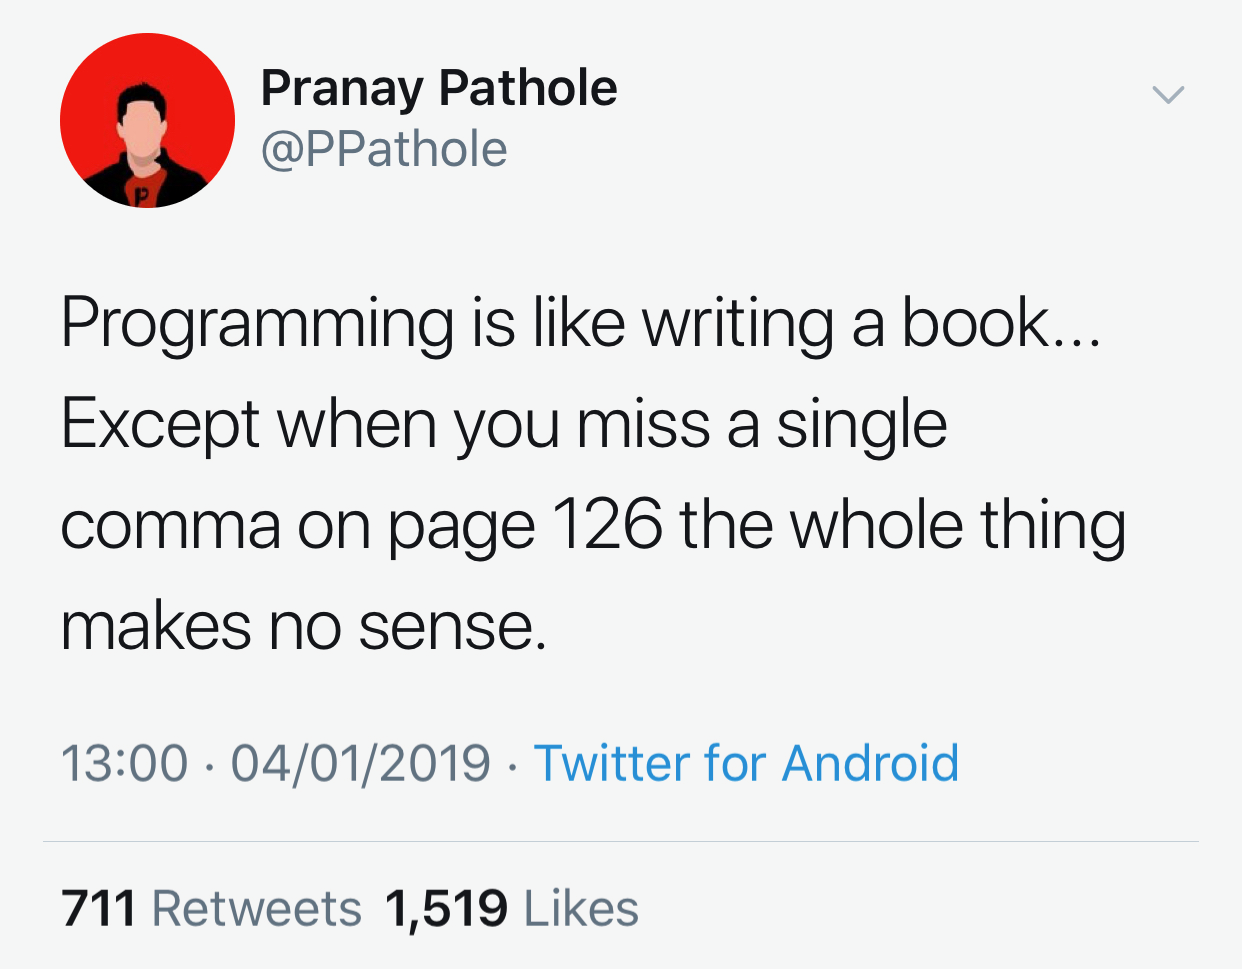 /img/programming-like-writing-book.png